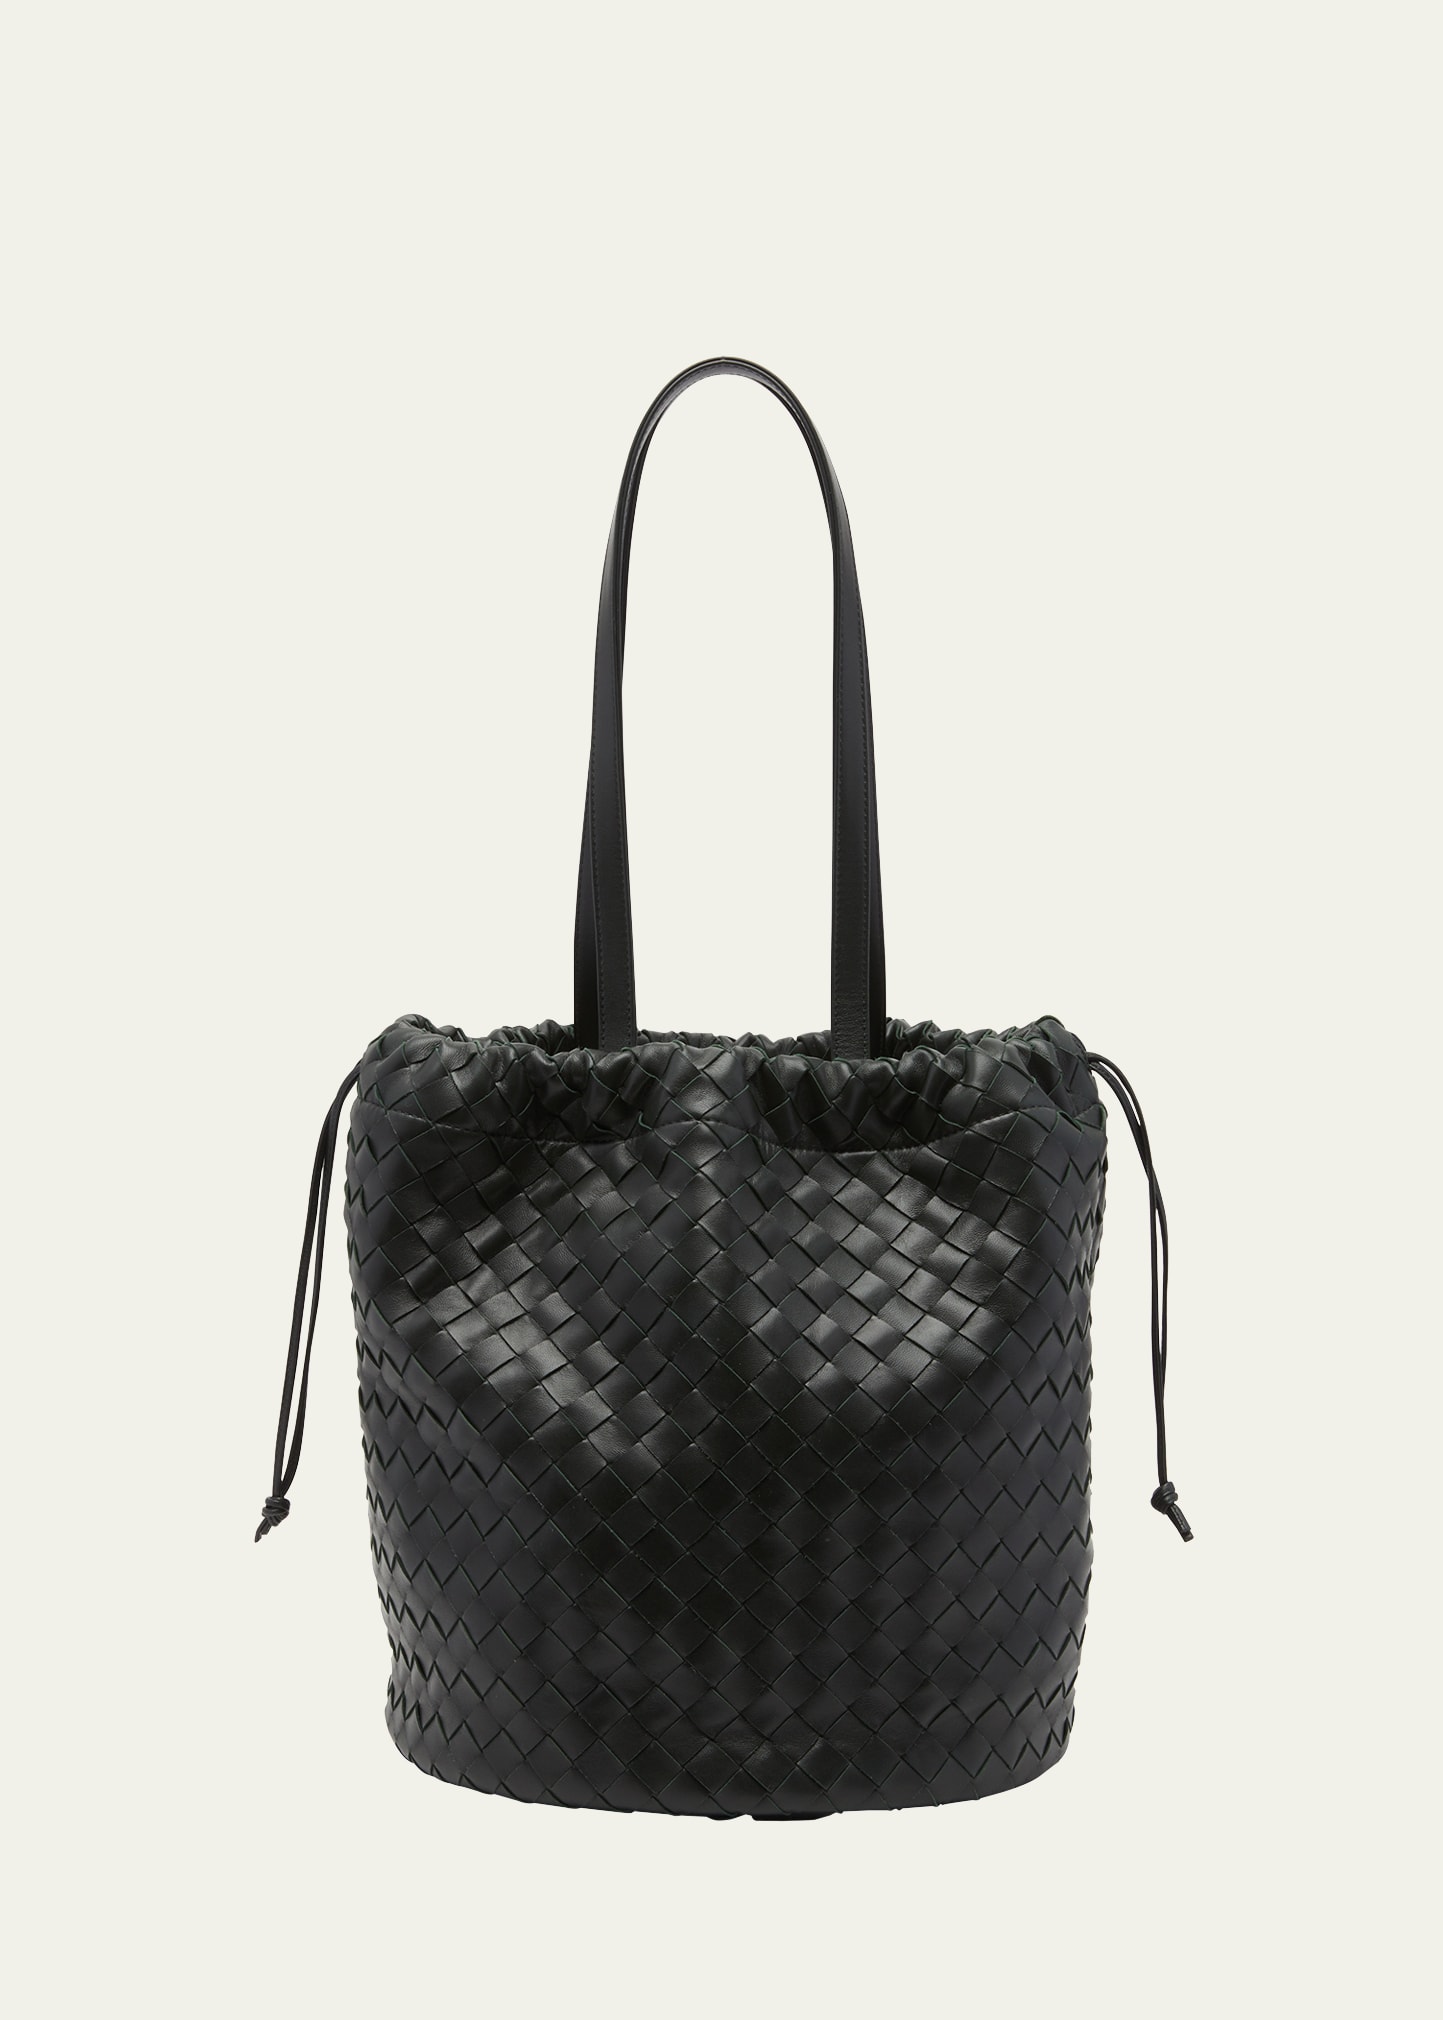 Medium Intrecciato Leather Bucket Bag